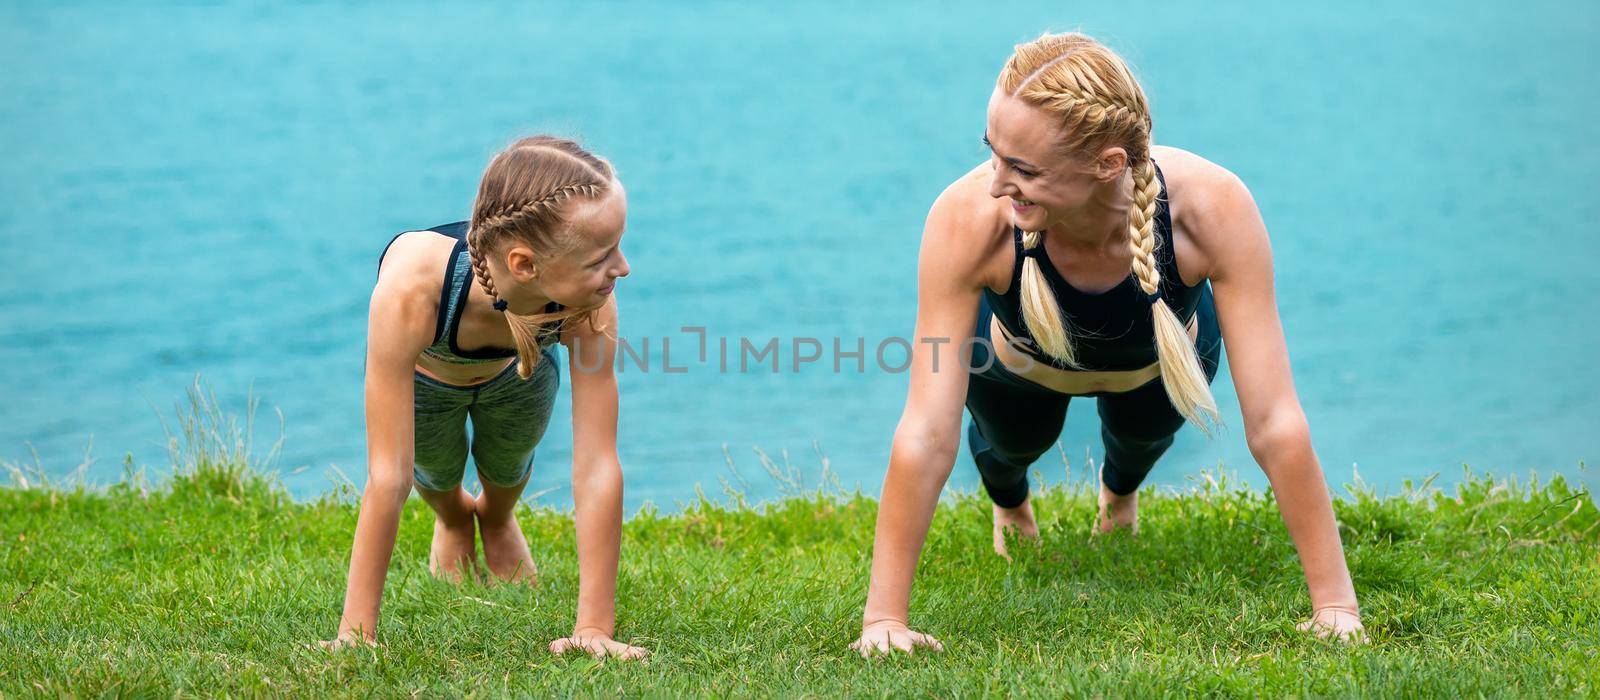 Woman and girl doing push-up exercise by okskukuruza